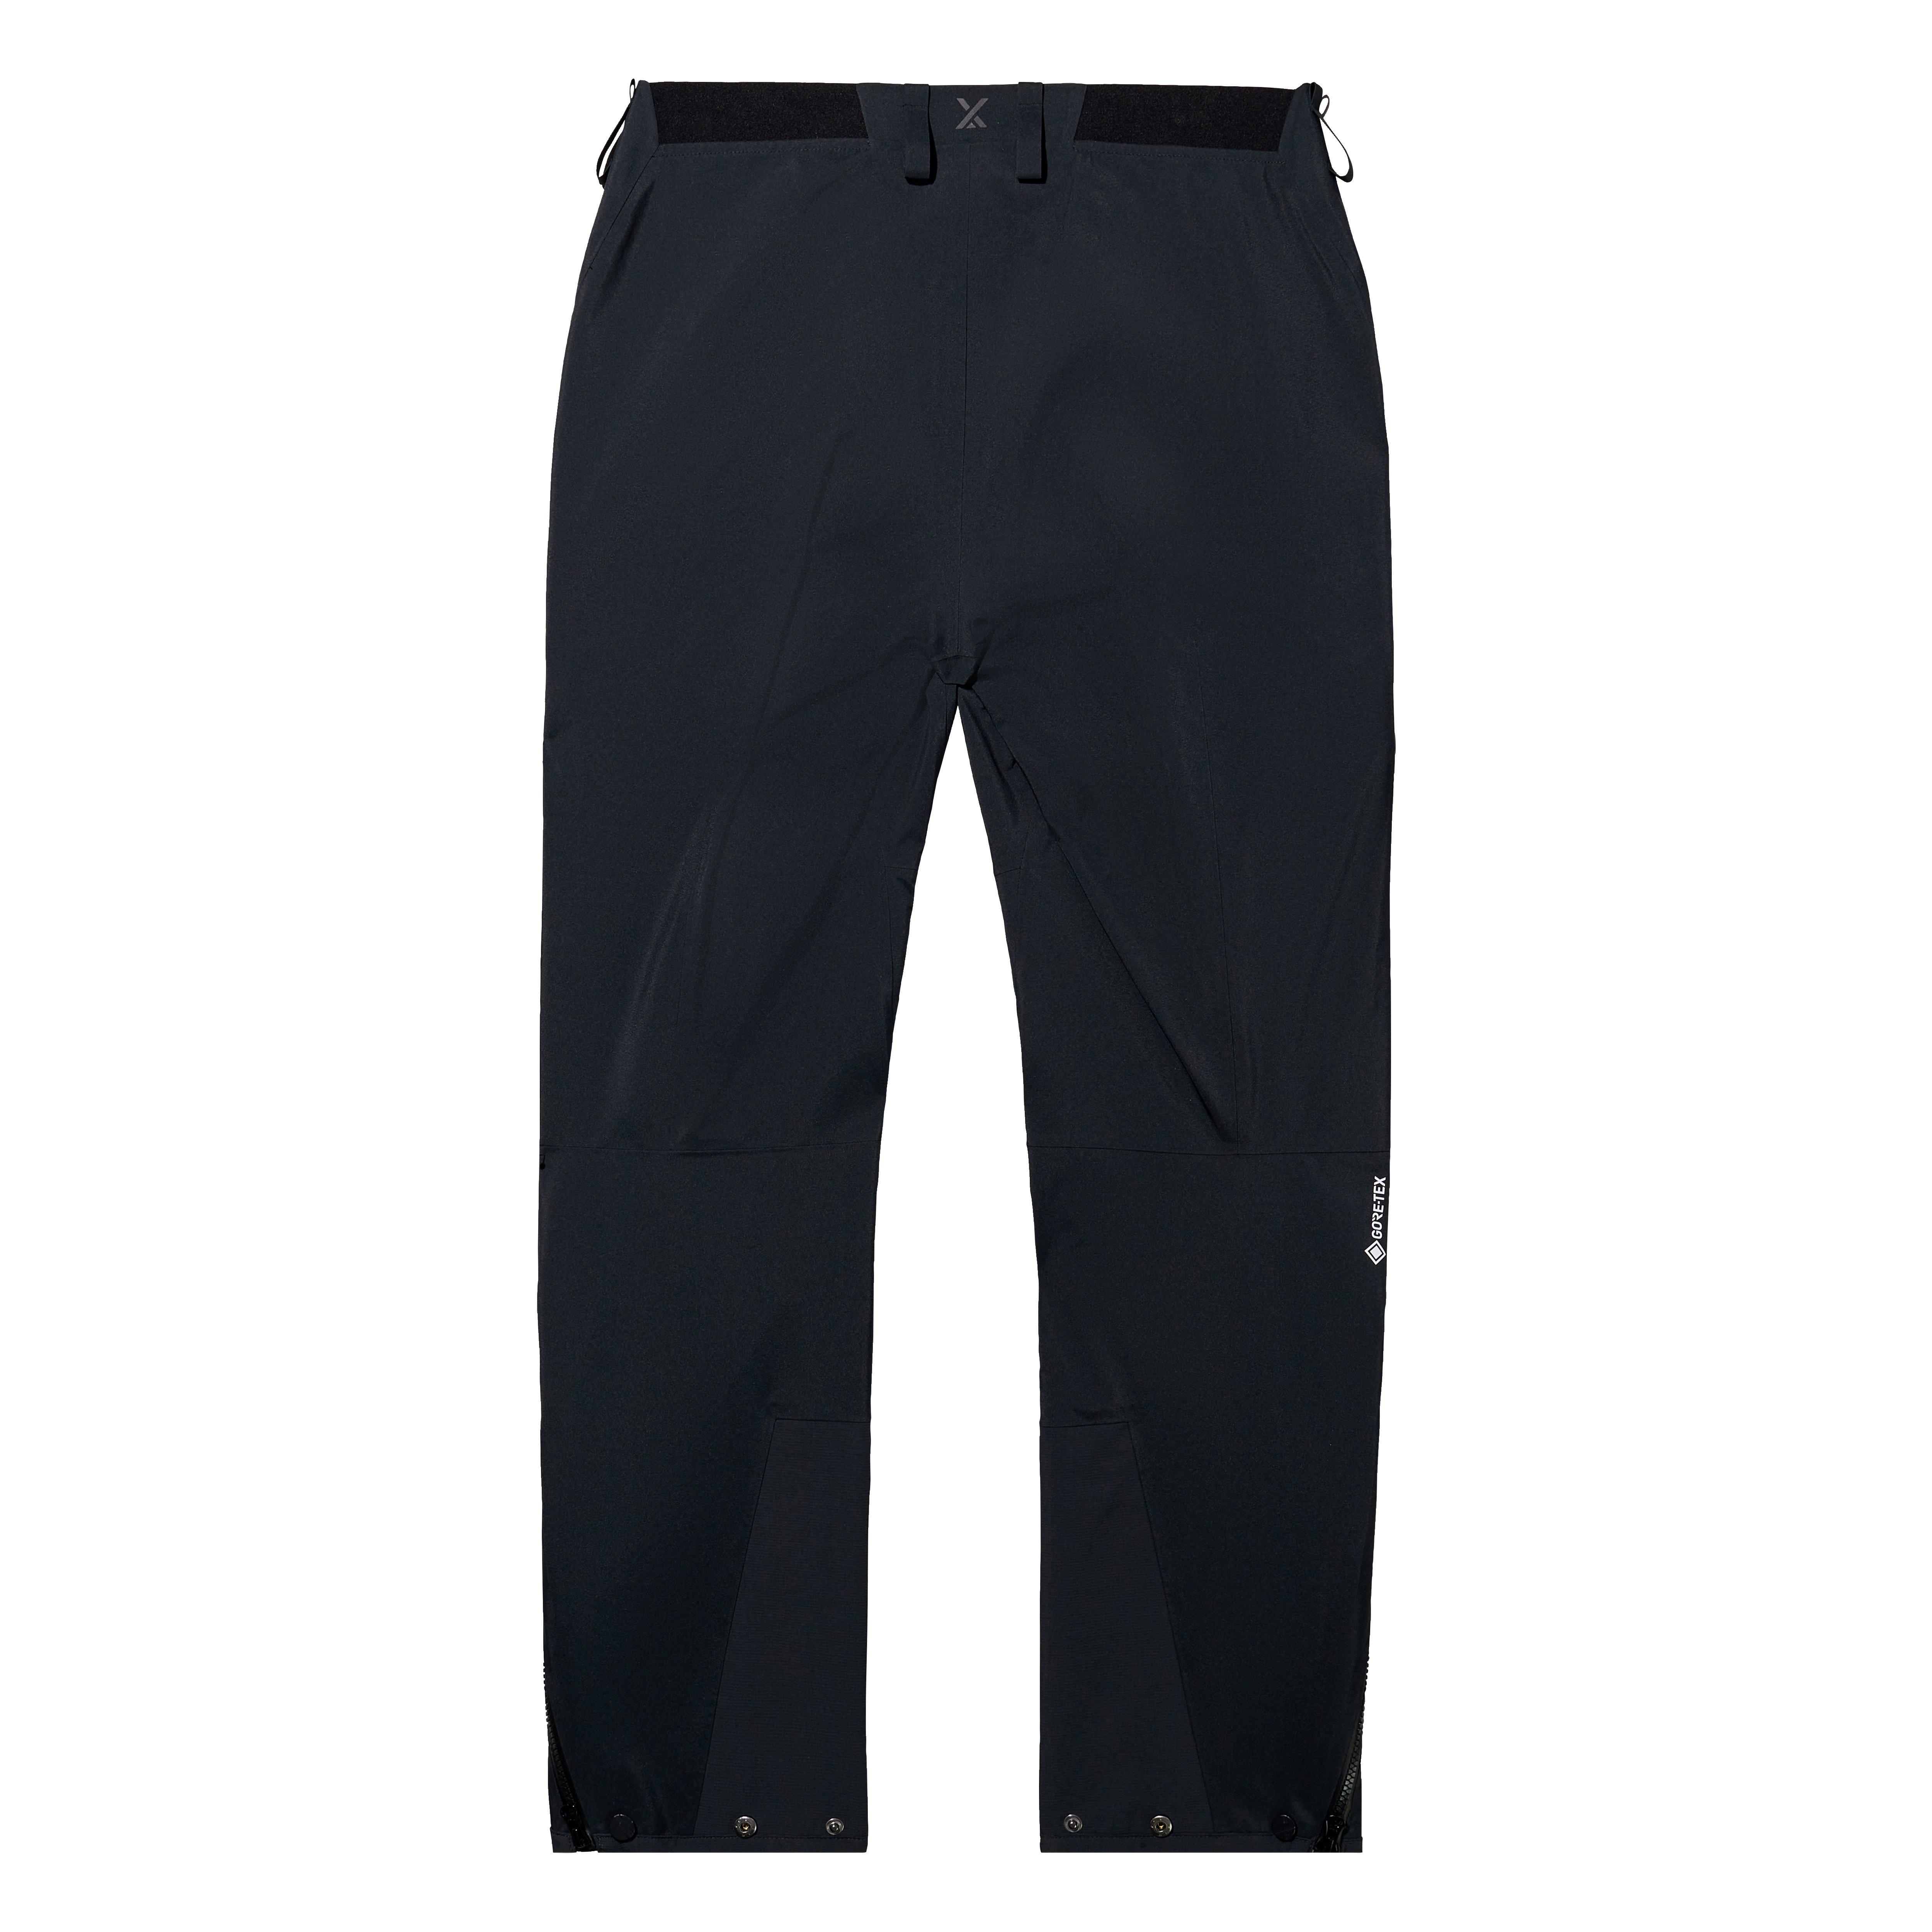 Berghaus - Women's MTN Seeker GTX Pant - Waterproof trousers - Black /  Black | 8 (UK)